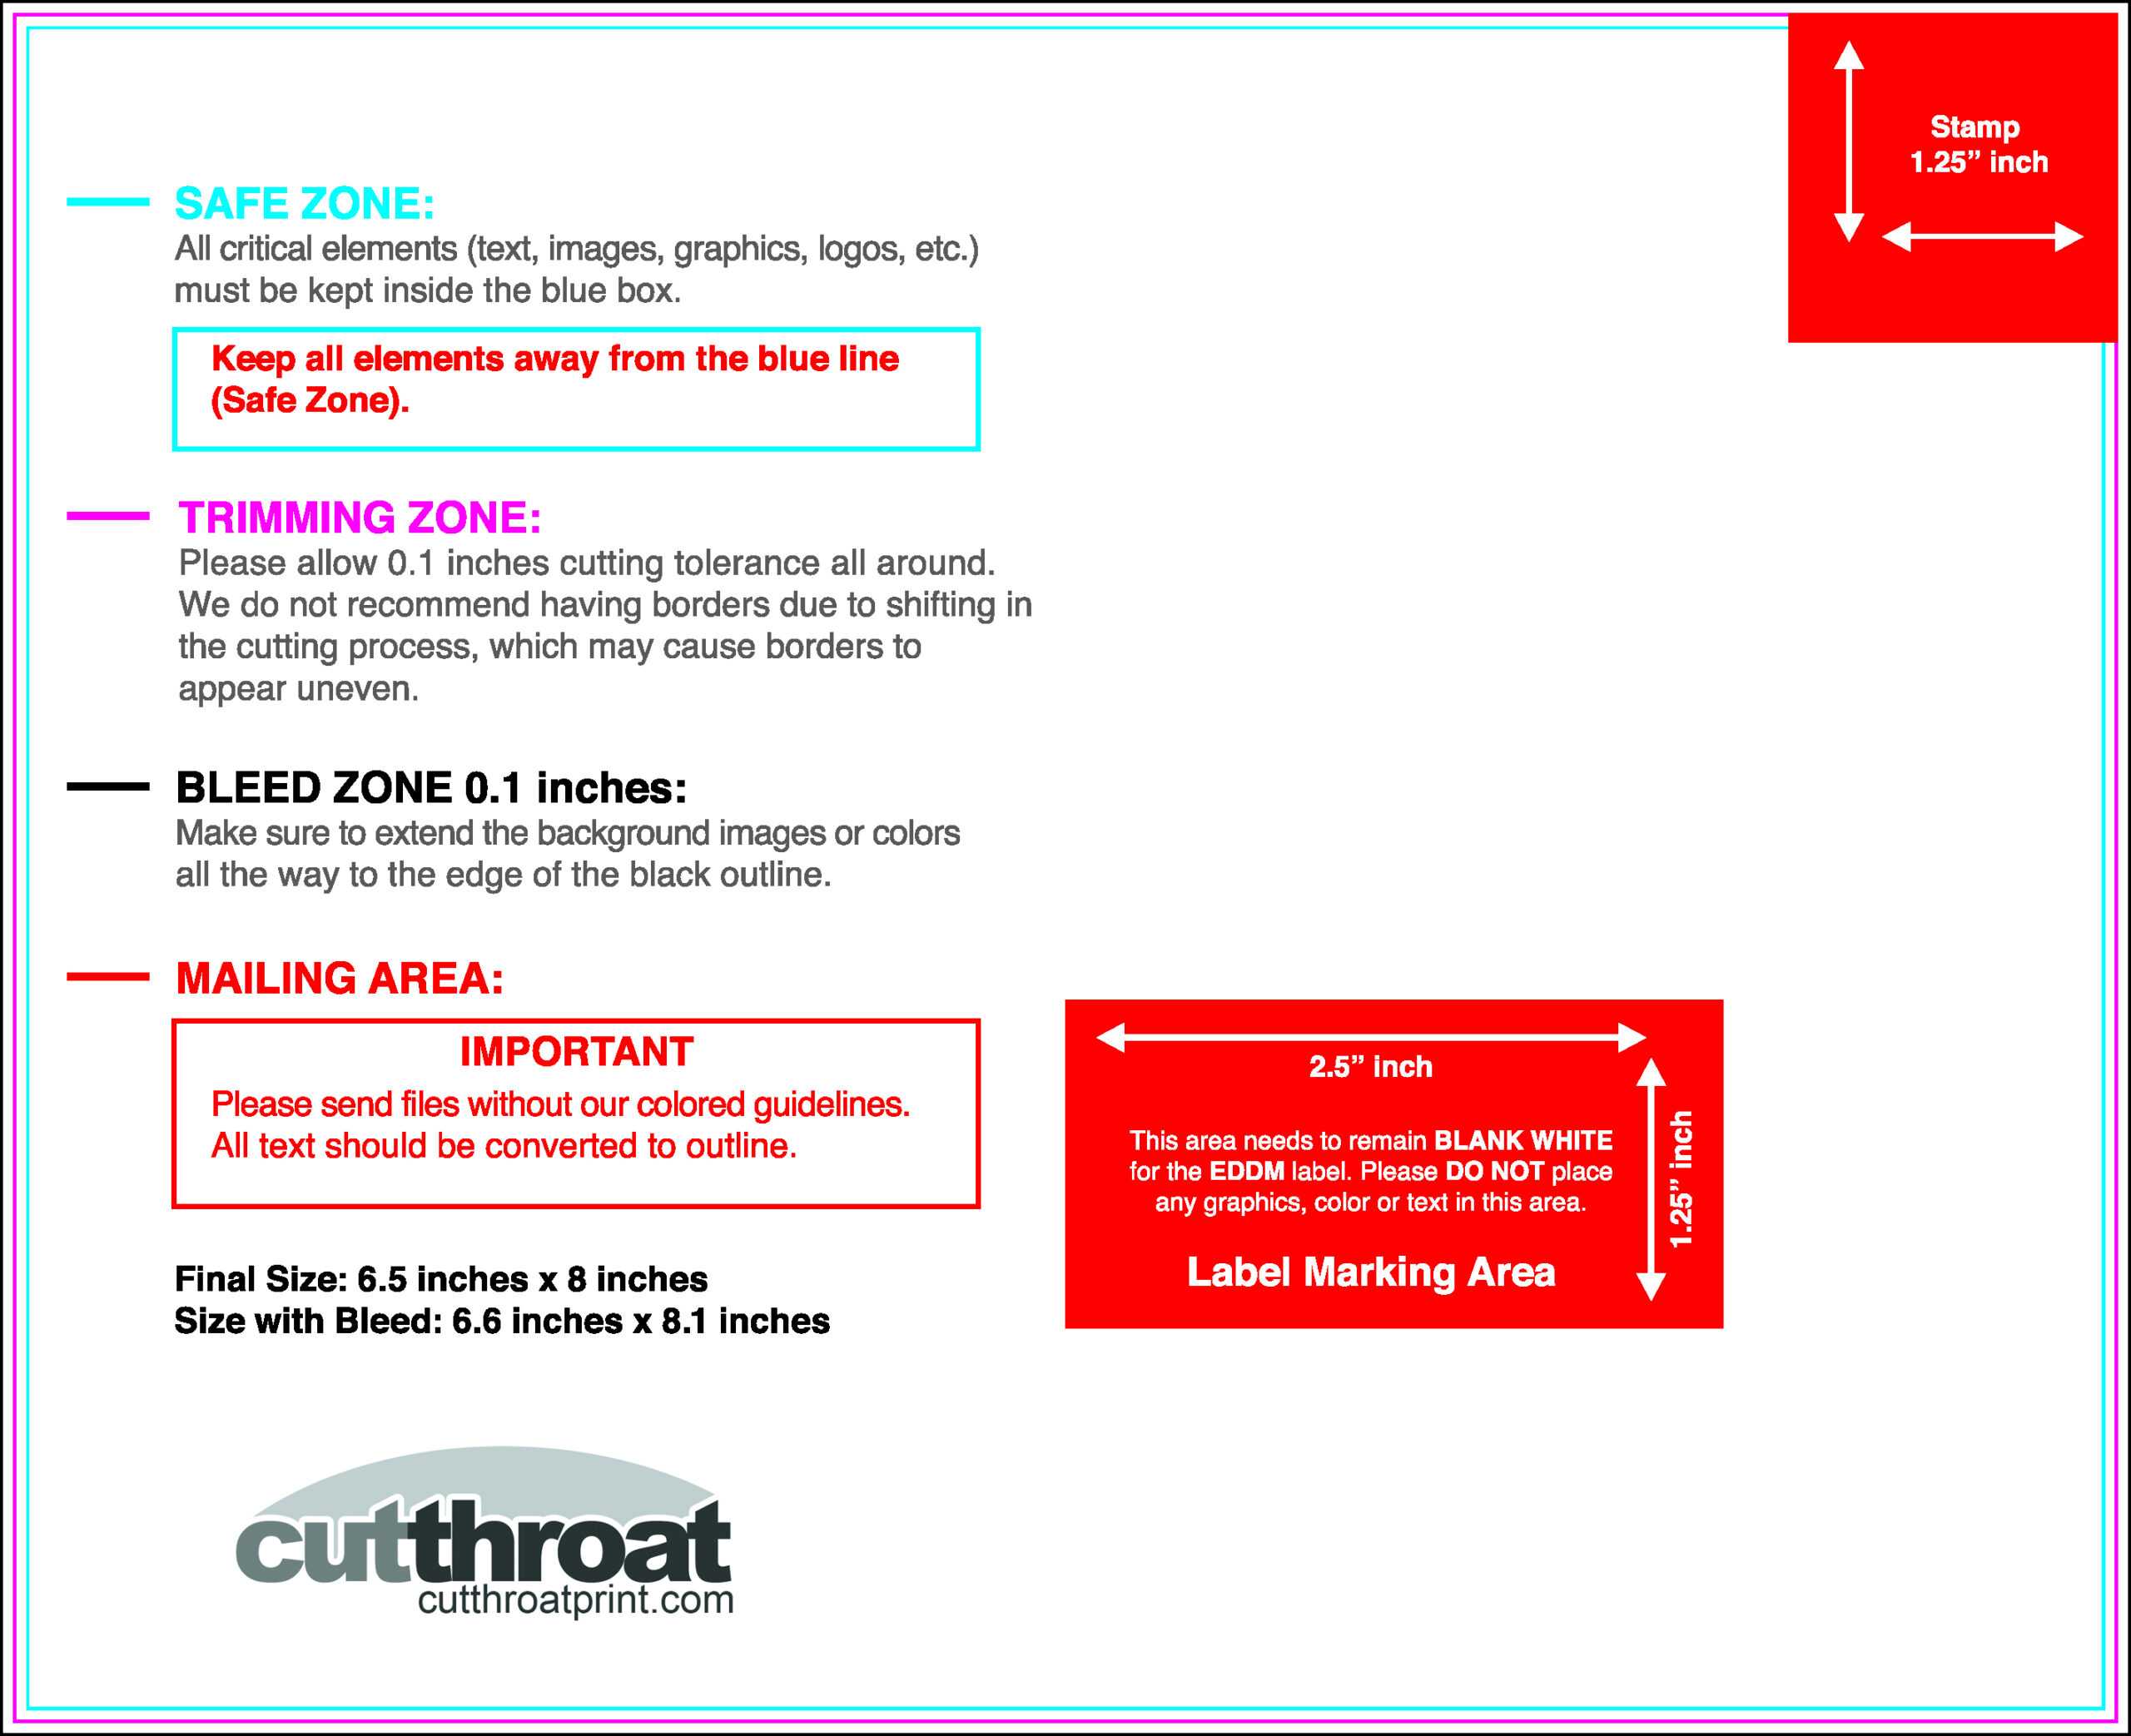 Cutthroat Printprint Your Postcards At Cutthroat Print! Pertaining To Eddm Postcard Template